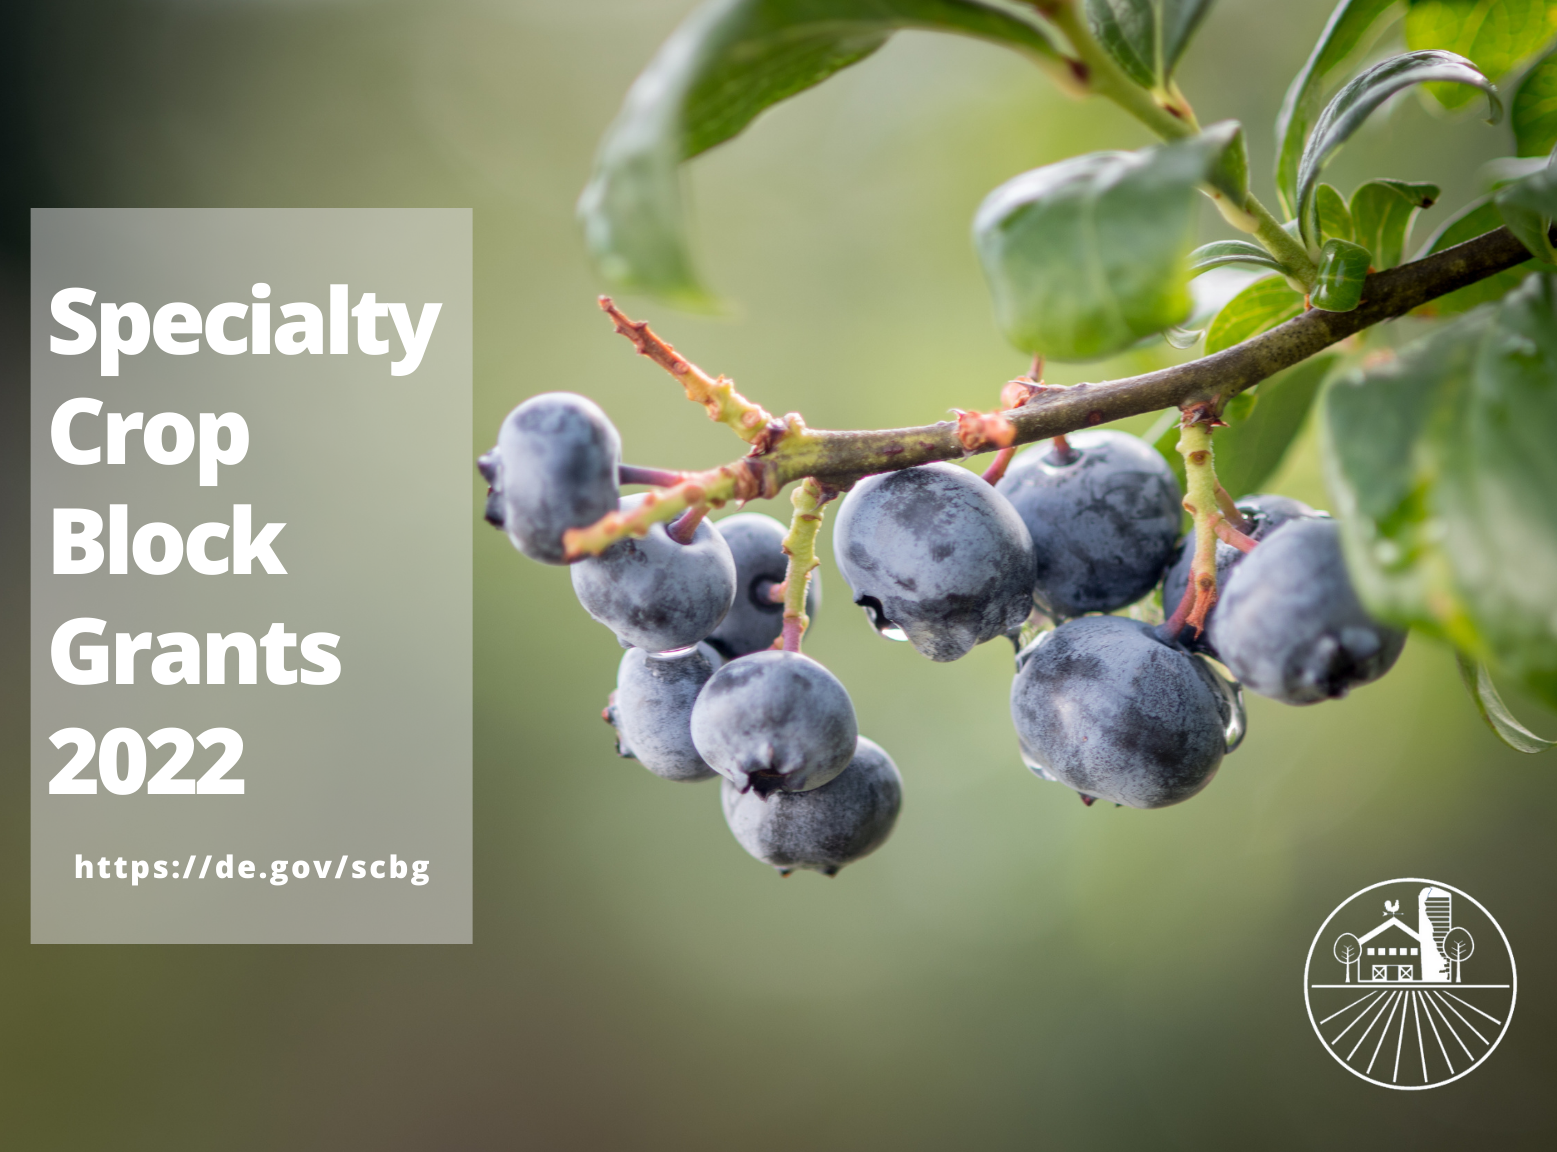 Blueberries with dew on bush, words: Specialty Crop Block Grants 2022 https://de.gov/scbg